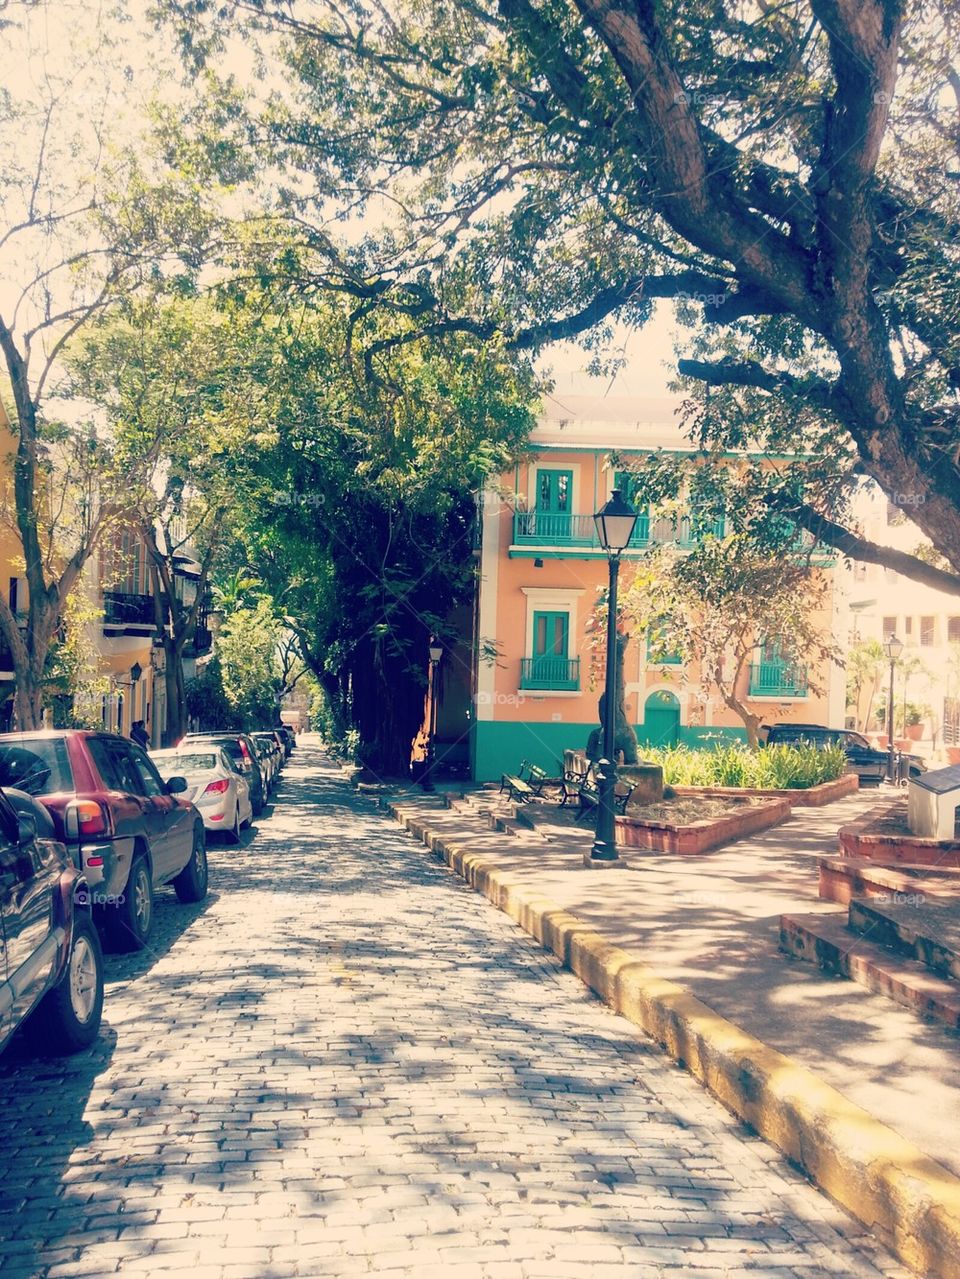 Calle en Viejo San Juan (street in Old San Juan)